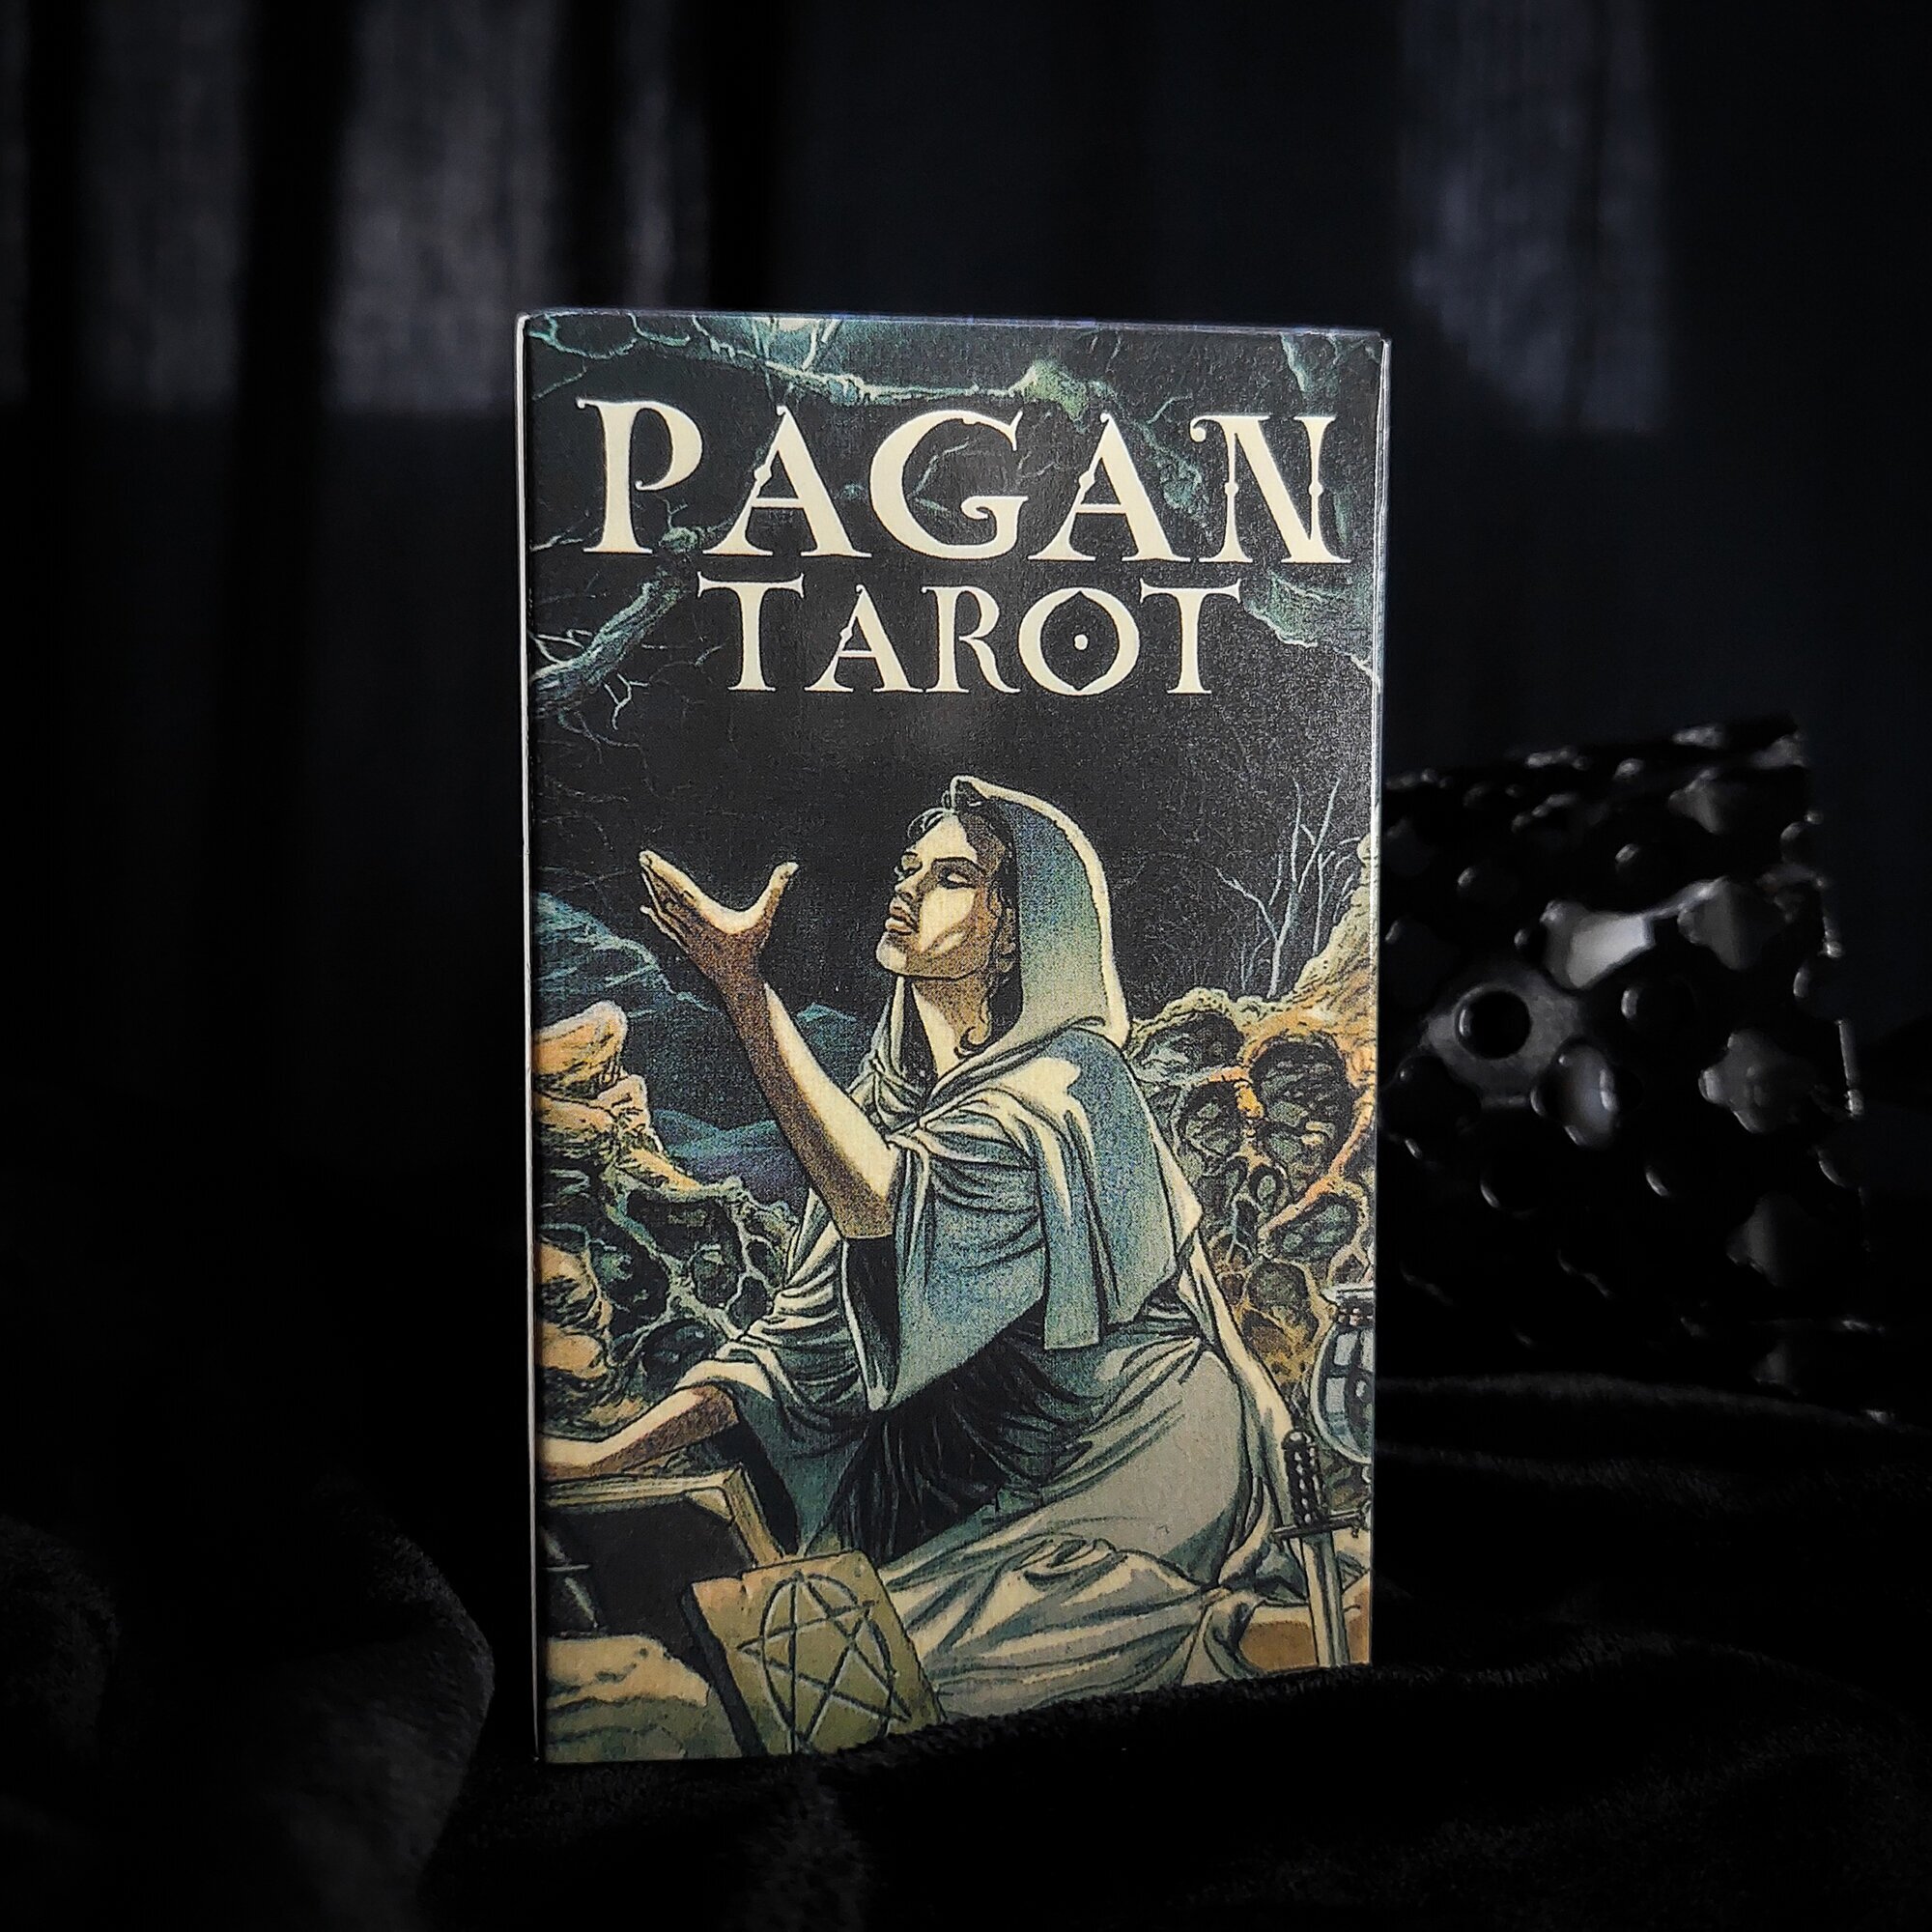 Языческое Таро (Pagan Tarot)